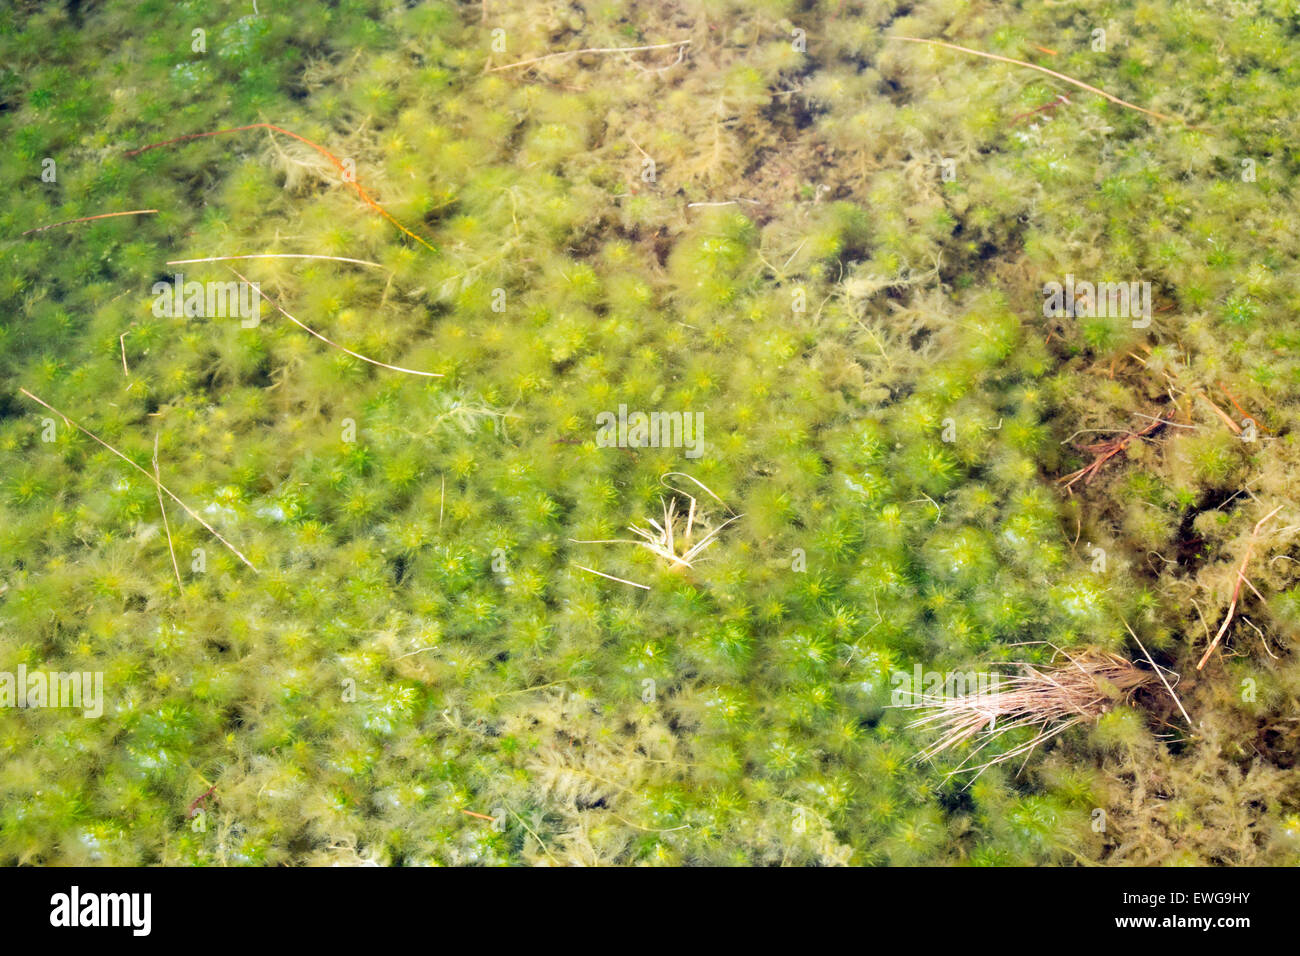 Moss in moorland bog on peat ground. Cumbria, UK. Stock Photo